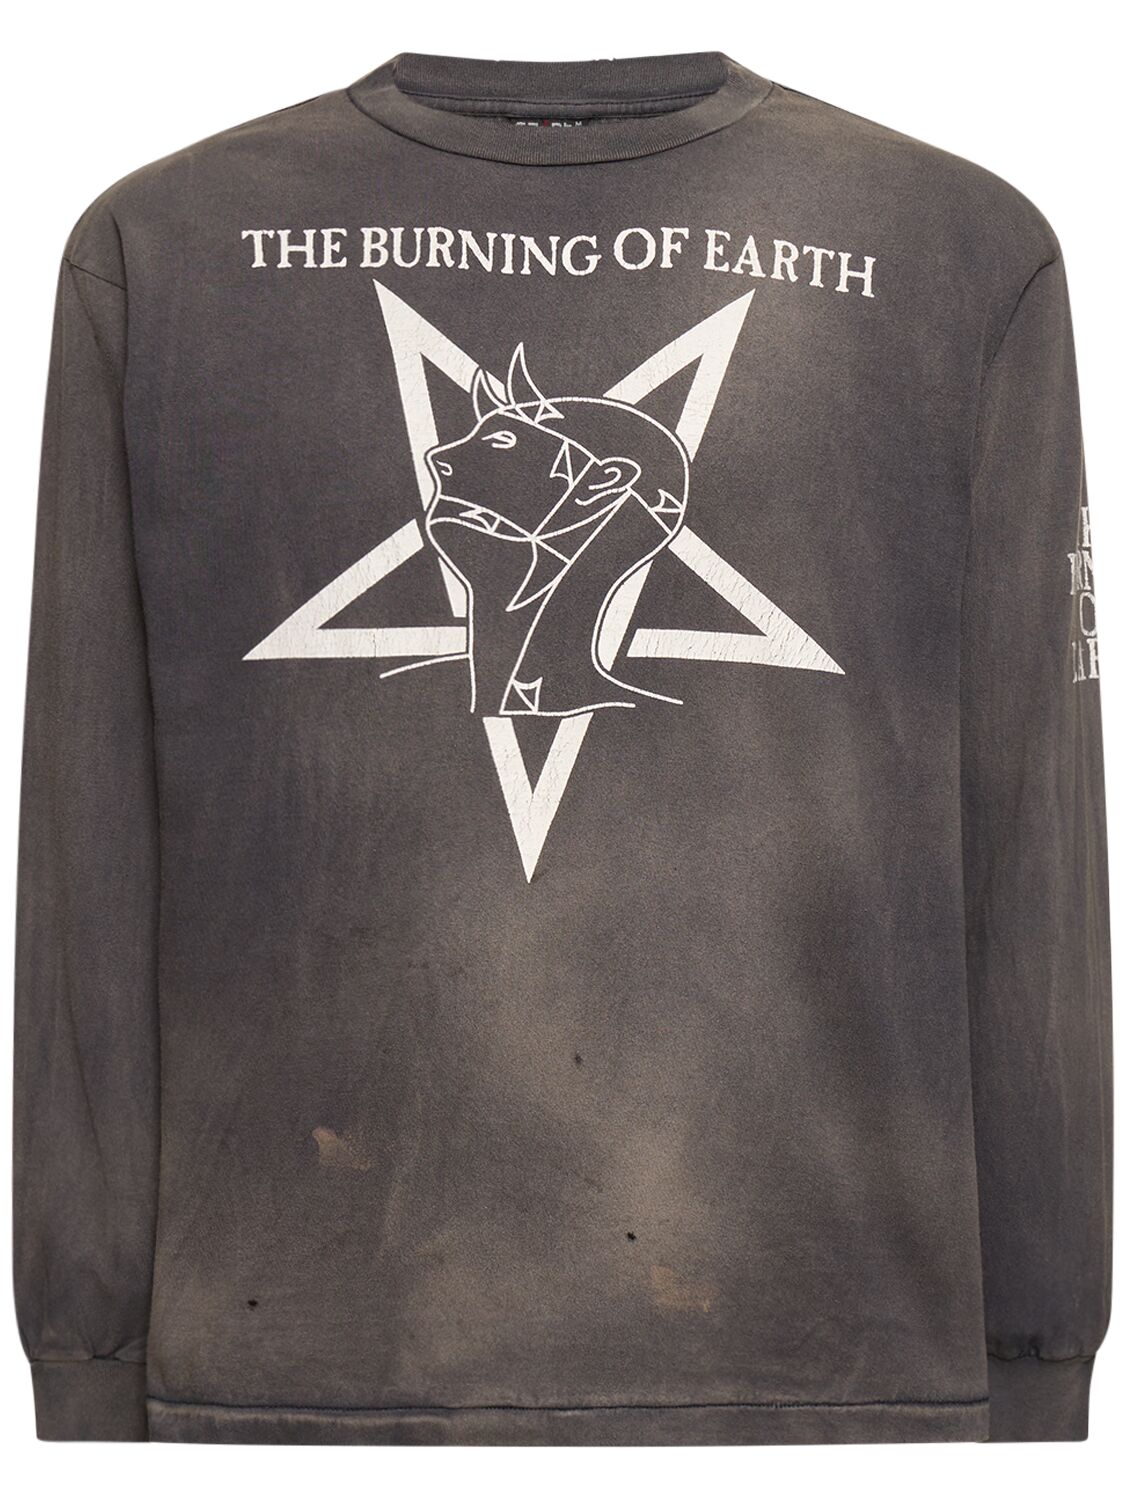 Burn Of Earth Long Sleeve T-shirt